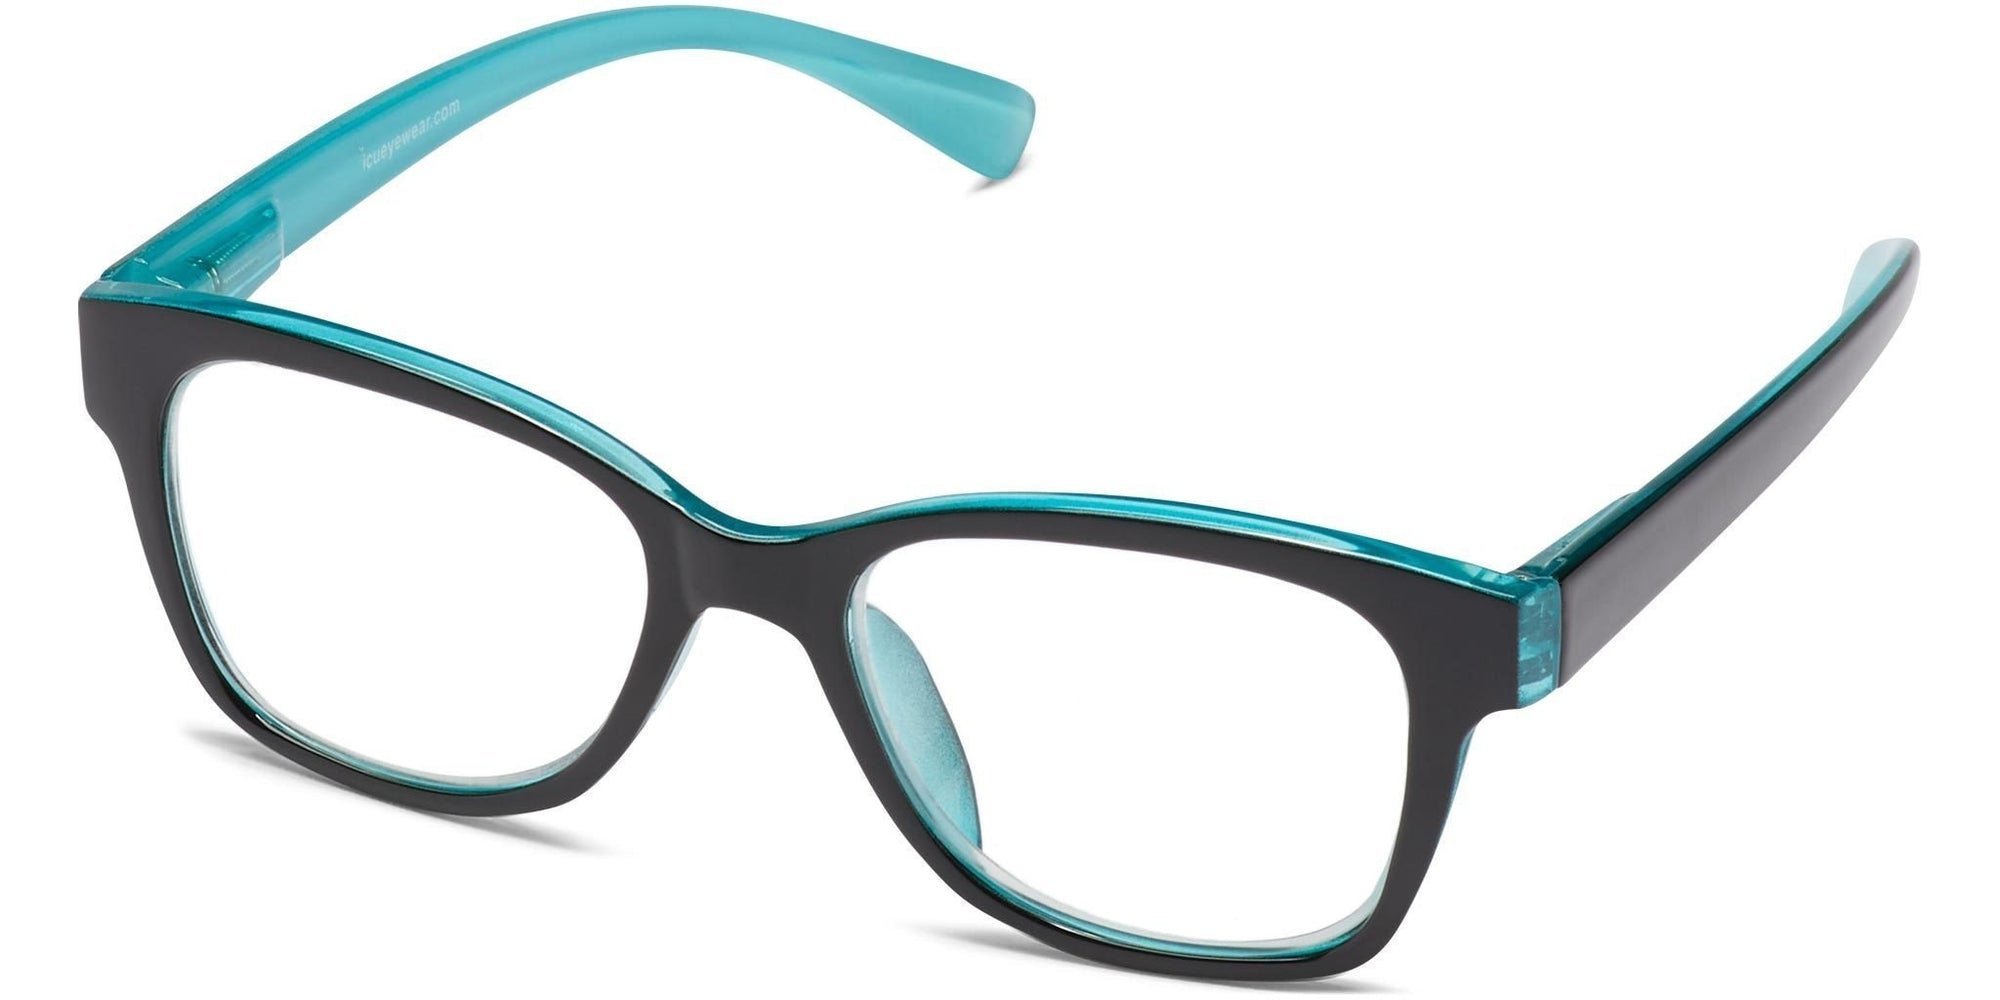 Valdivia - Black with Turquoise / 1.25 - Reading Glasses